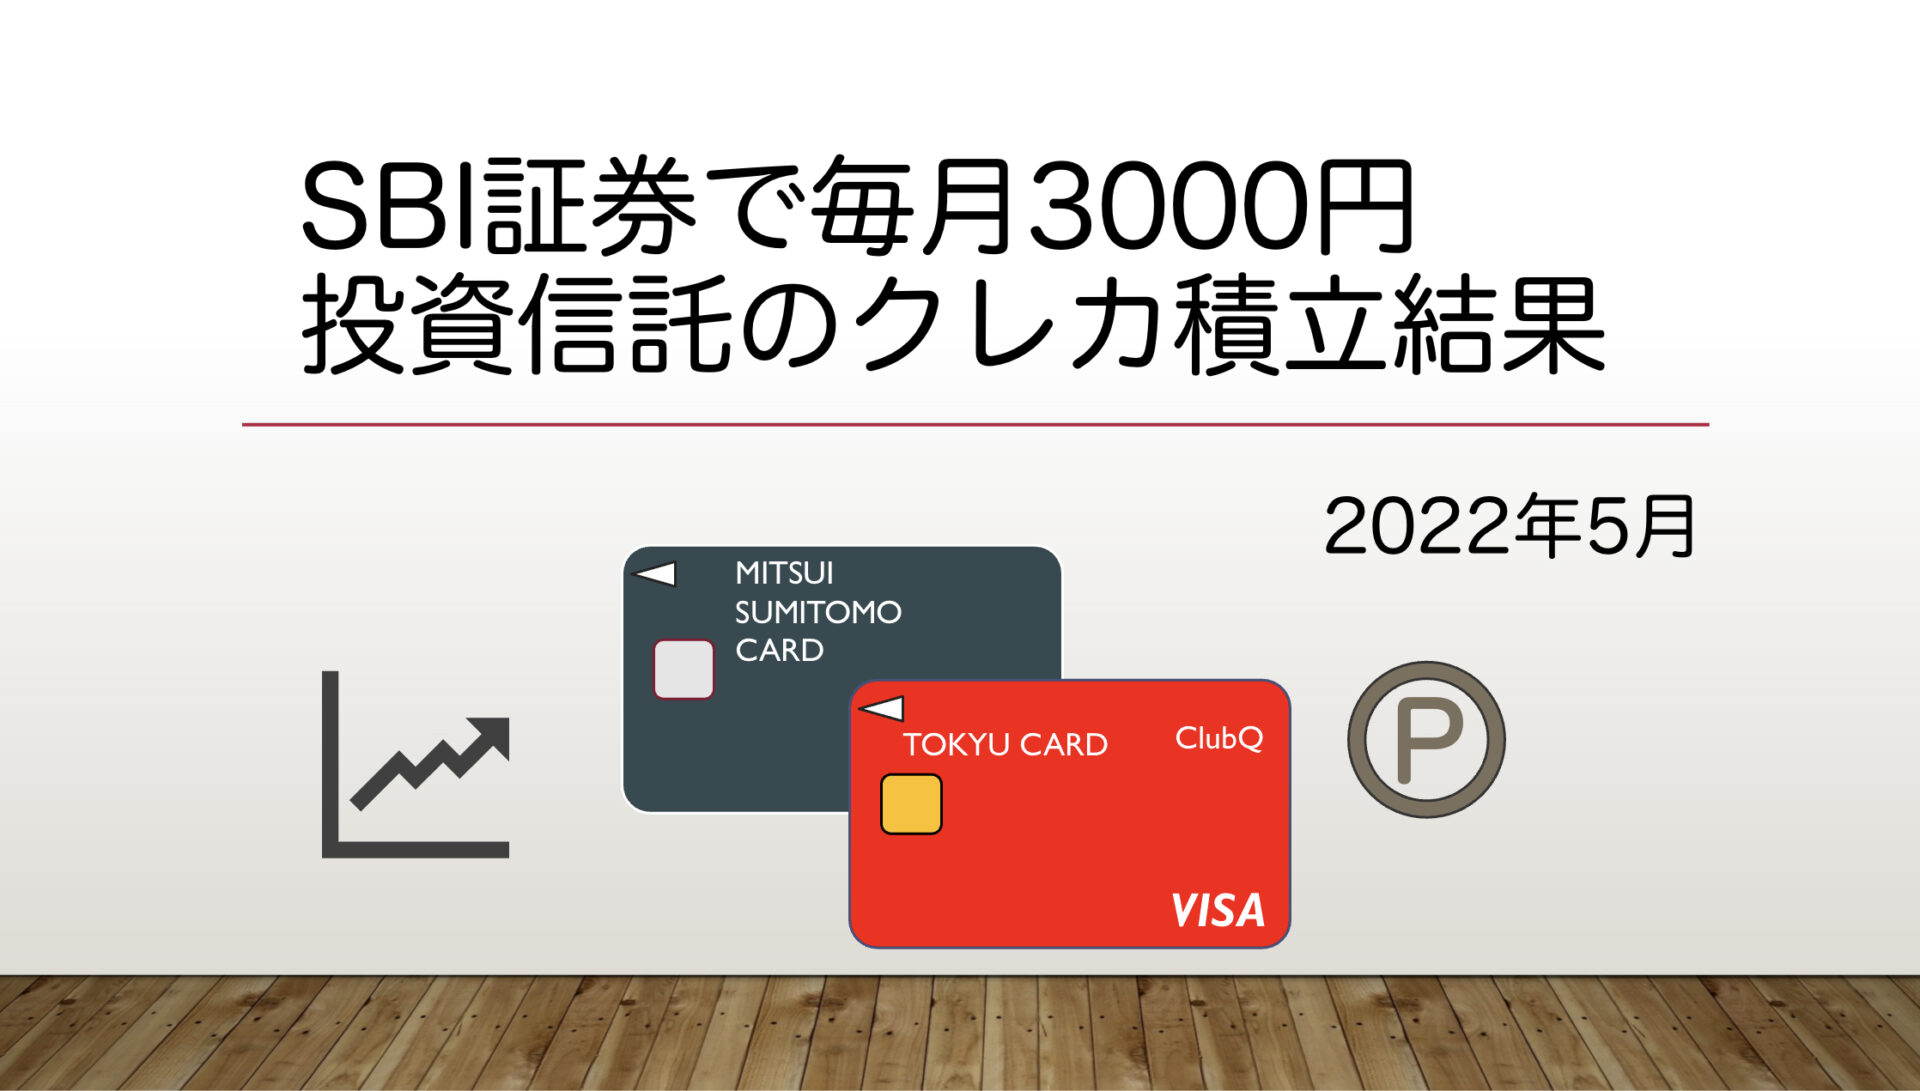 【SBI証券】三井住友カードによる投資信託のクレカ積立結果【2022年5月】